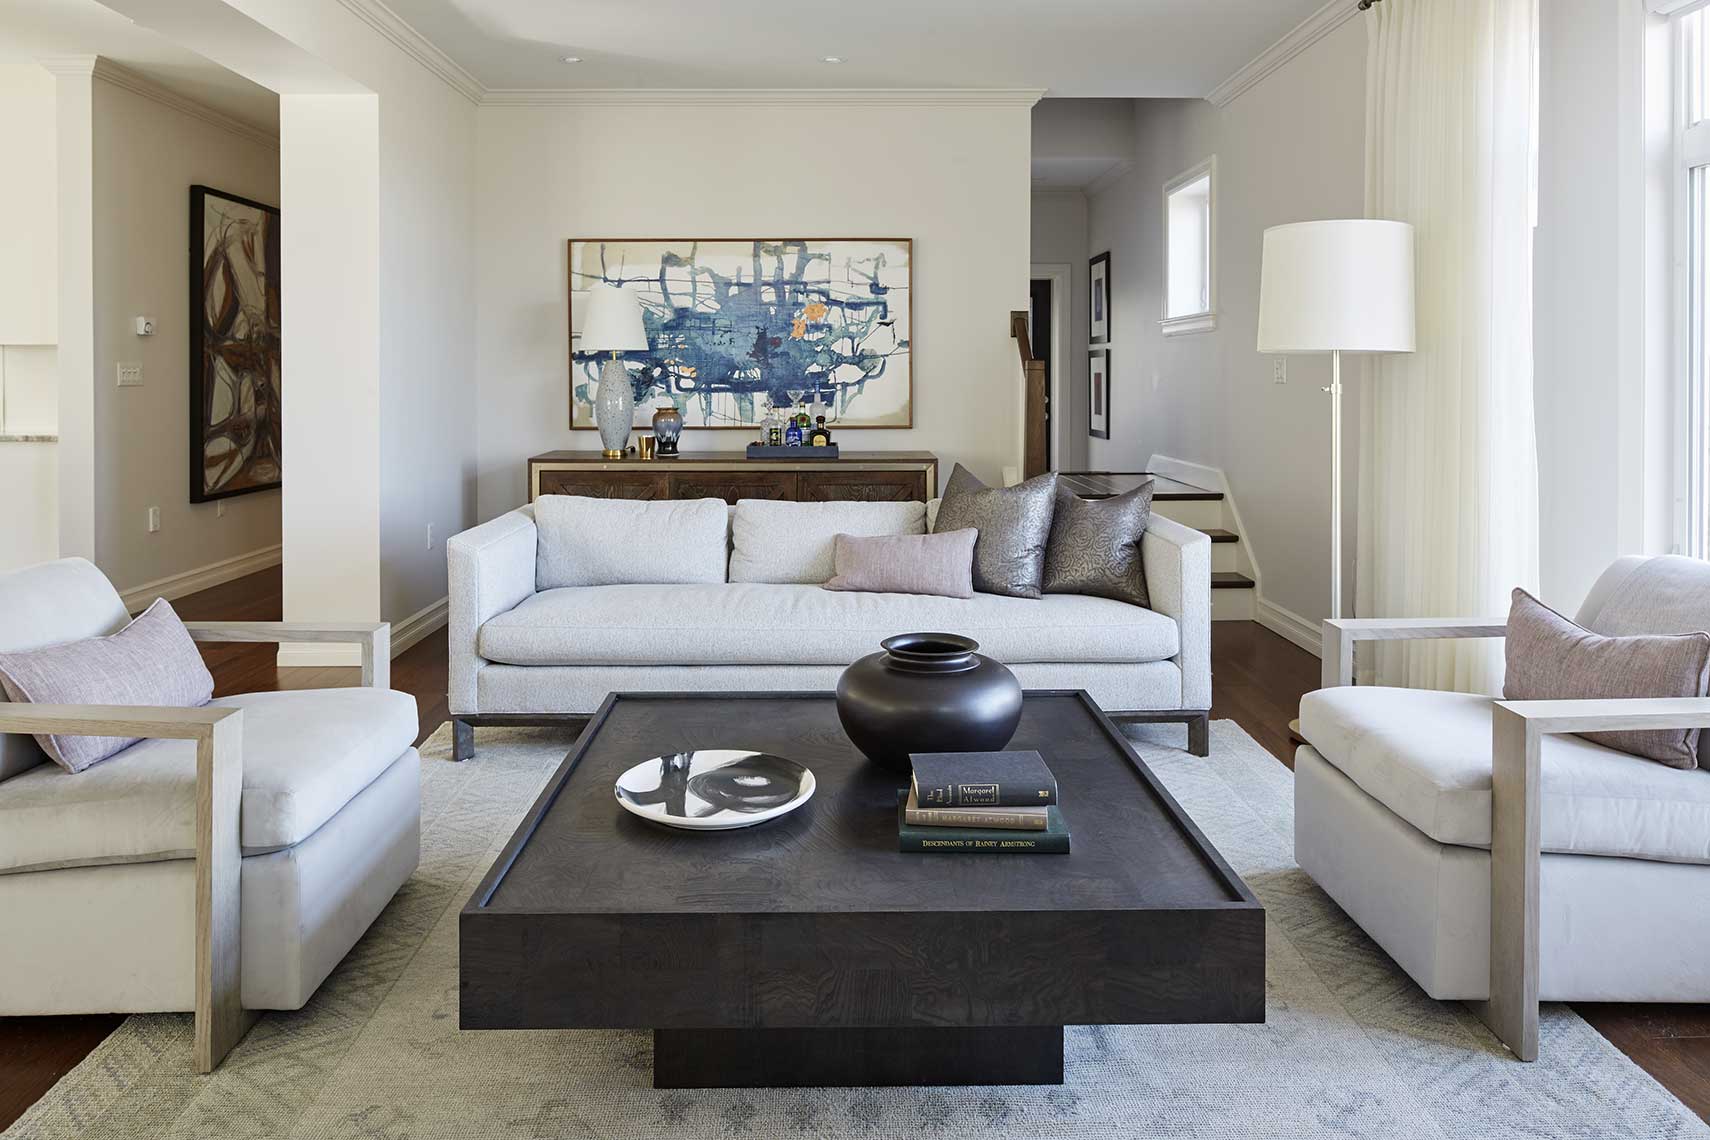 Interior-Design-Modern-Livingroom-31westgate-Halifax-Kimber-Photographer-Architecture-1